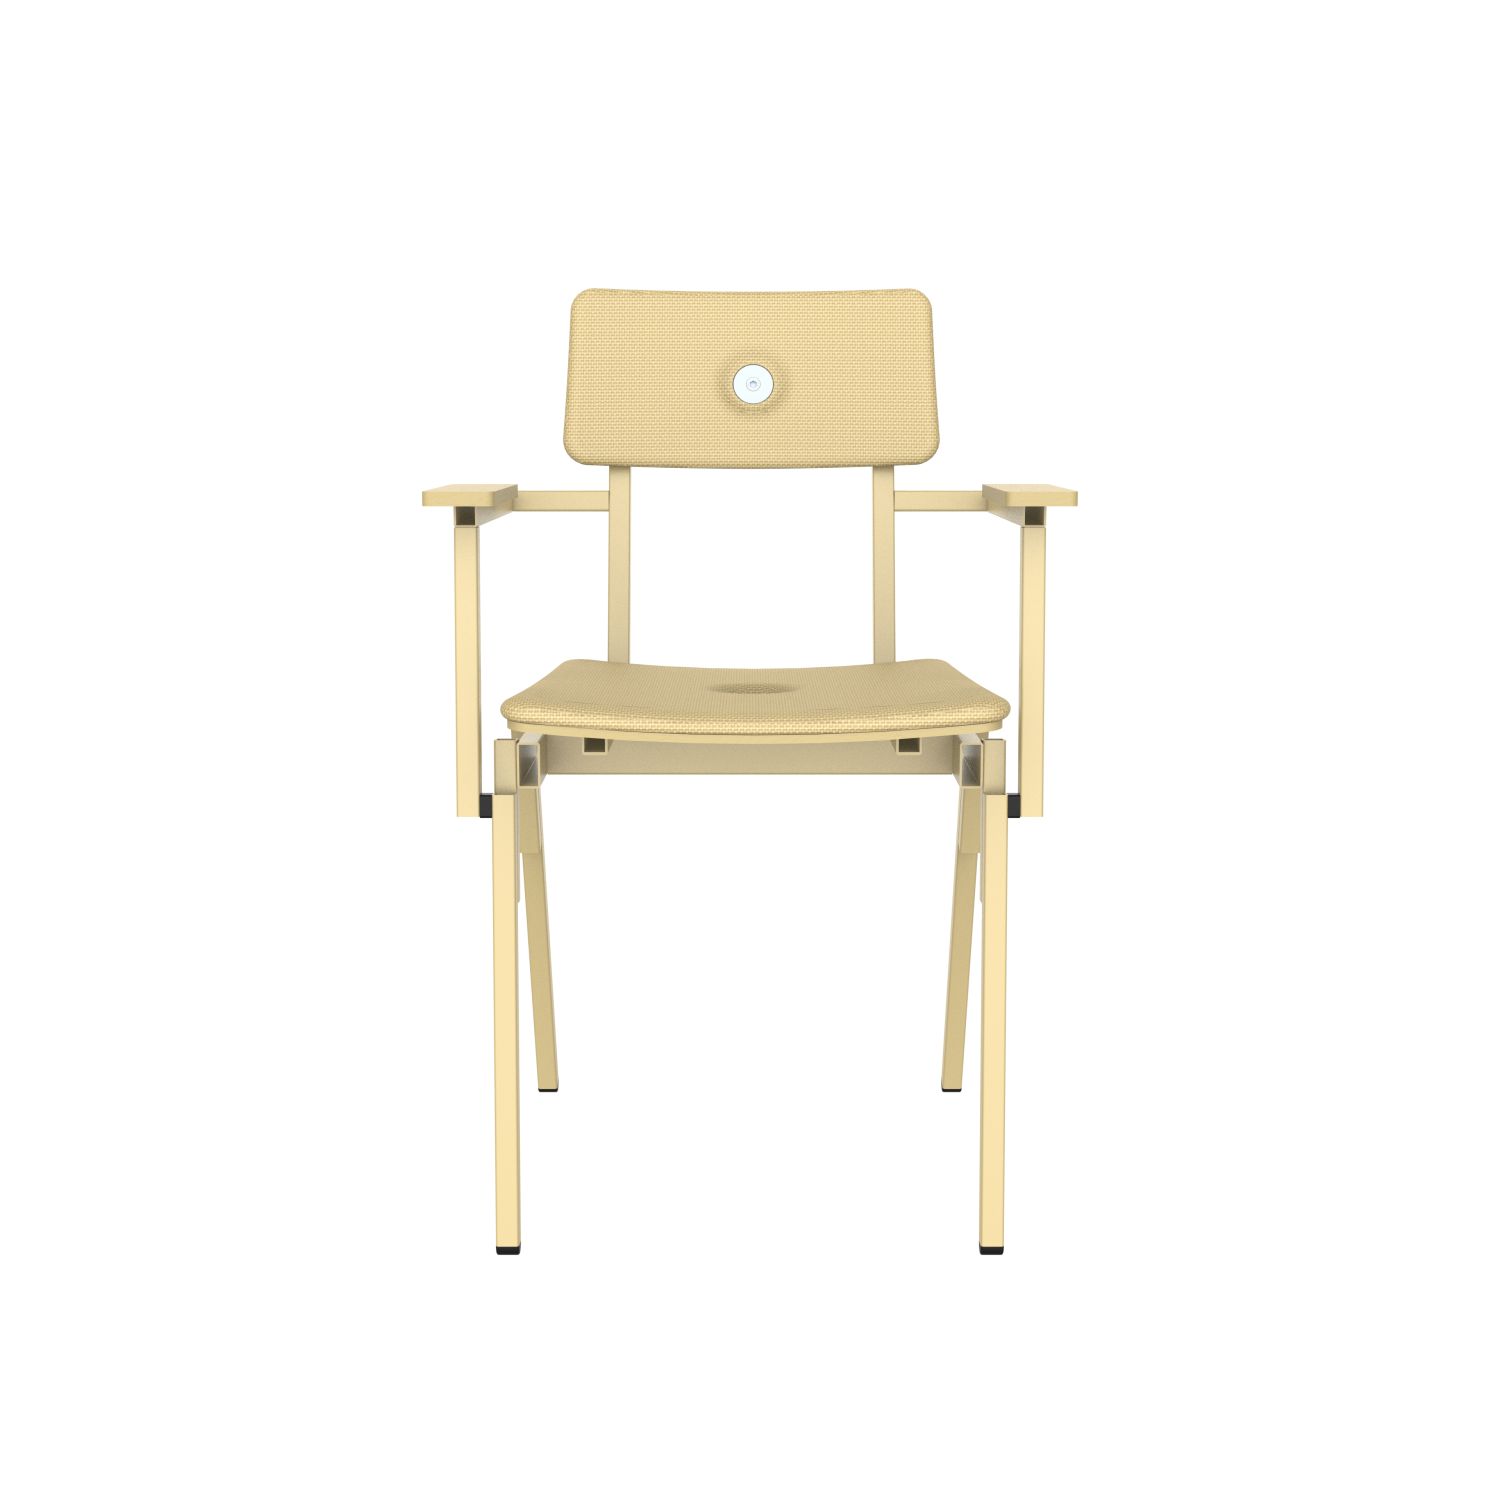 lensvelt piet hein eek mitw upholstered chair with armrests light brown 141 green beige ral1000 hard leg ends